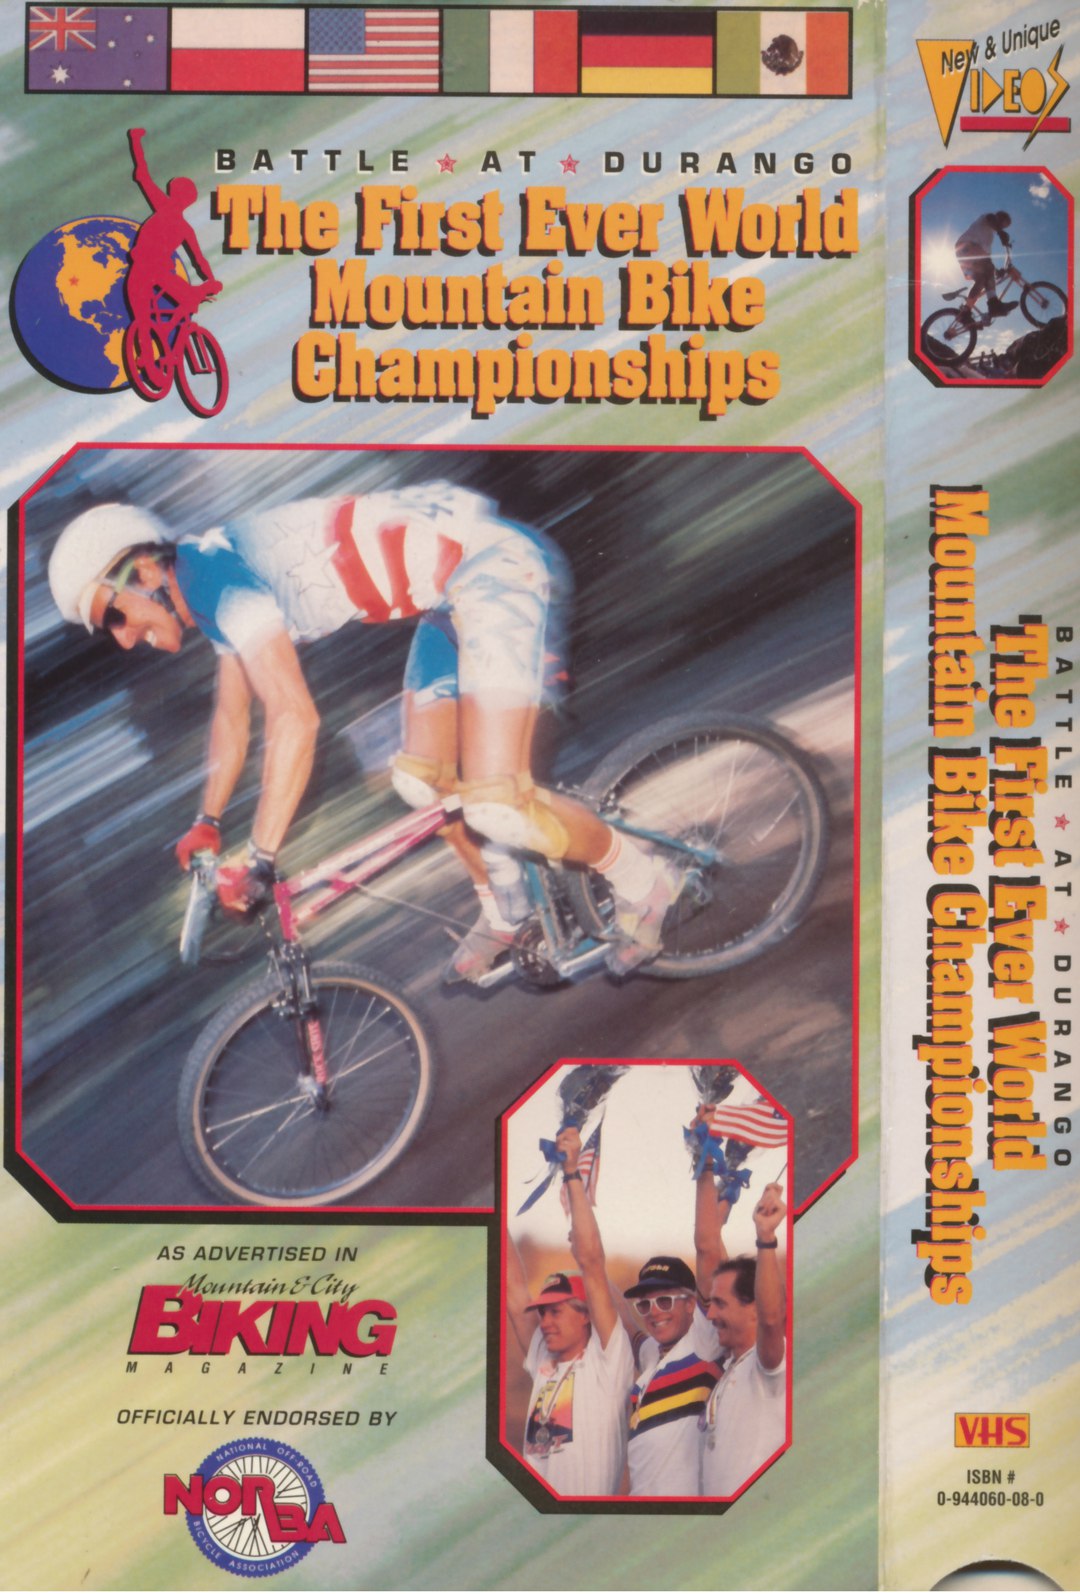 Battle at Durango first world mountain biking championships box cover